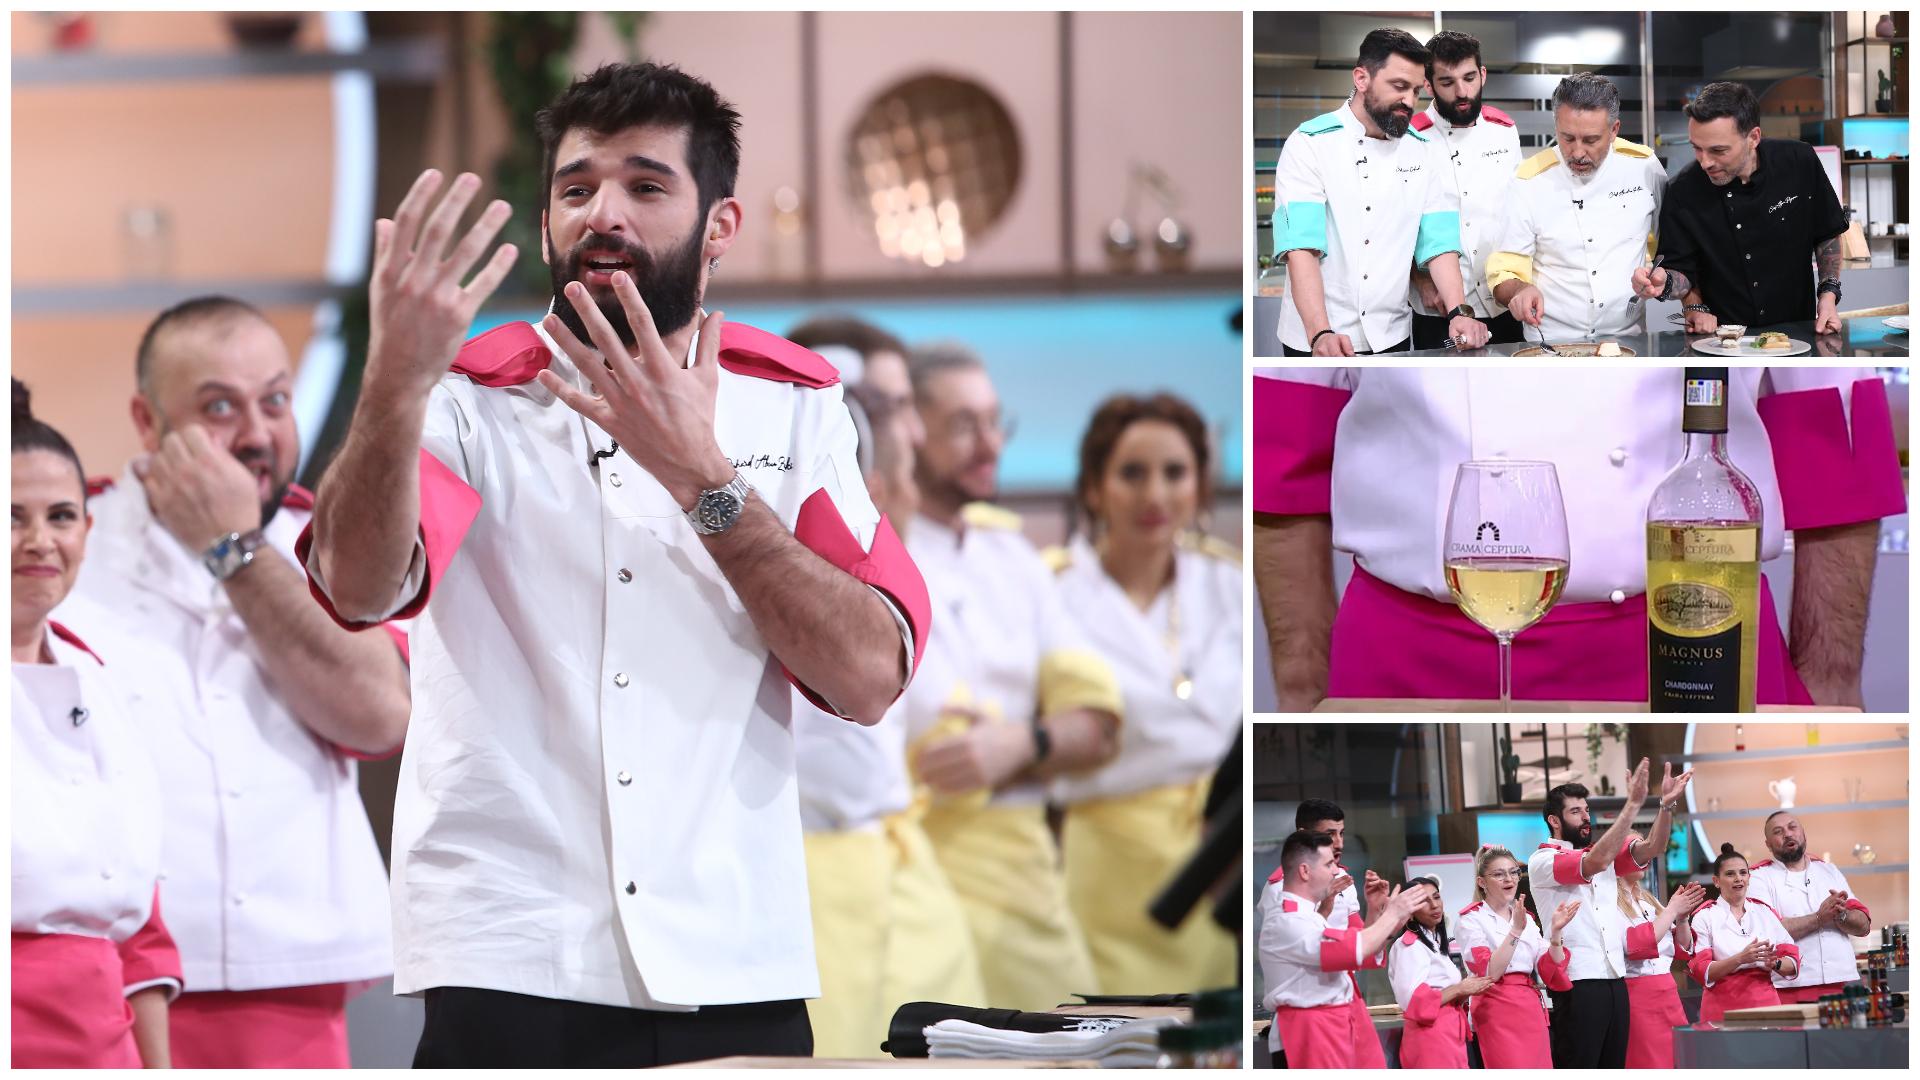 Colaj cu chef Richard Abou Zaki și echipa roz la Chefi la cuțite